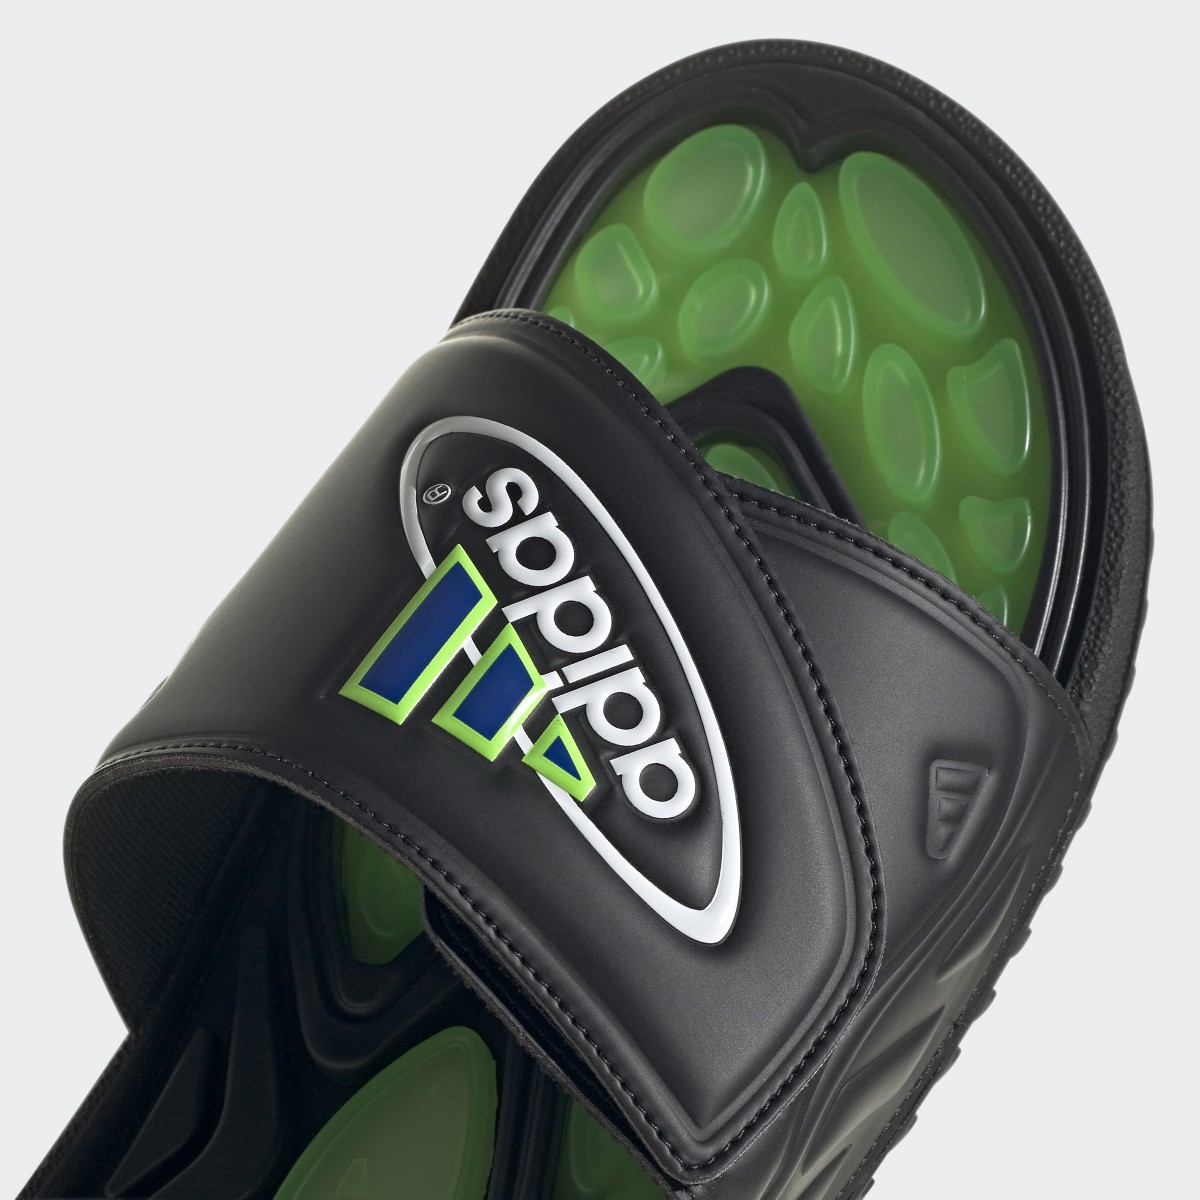 Adidas Sandale Reptossage. 9